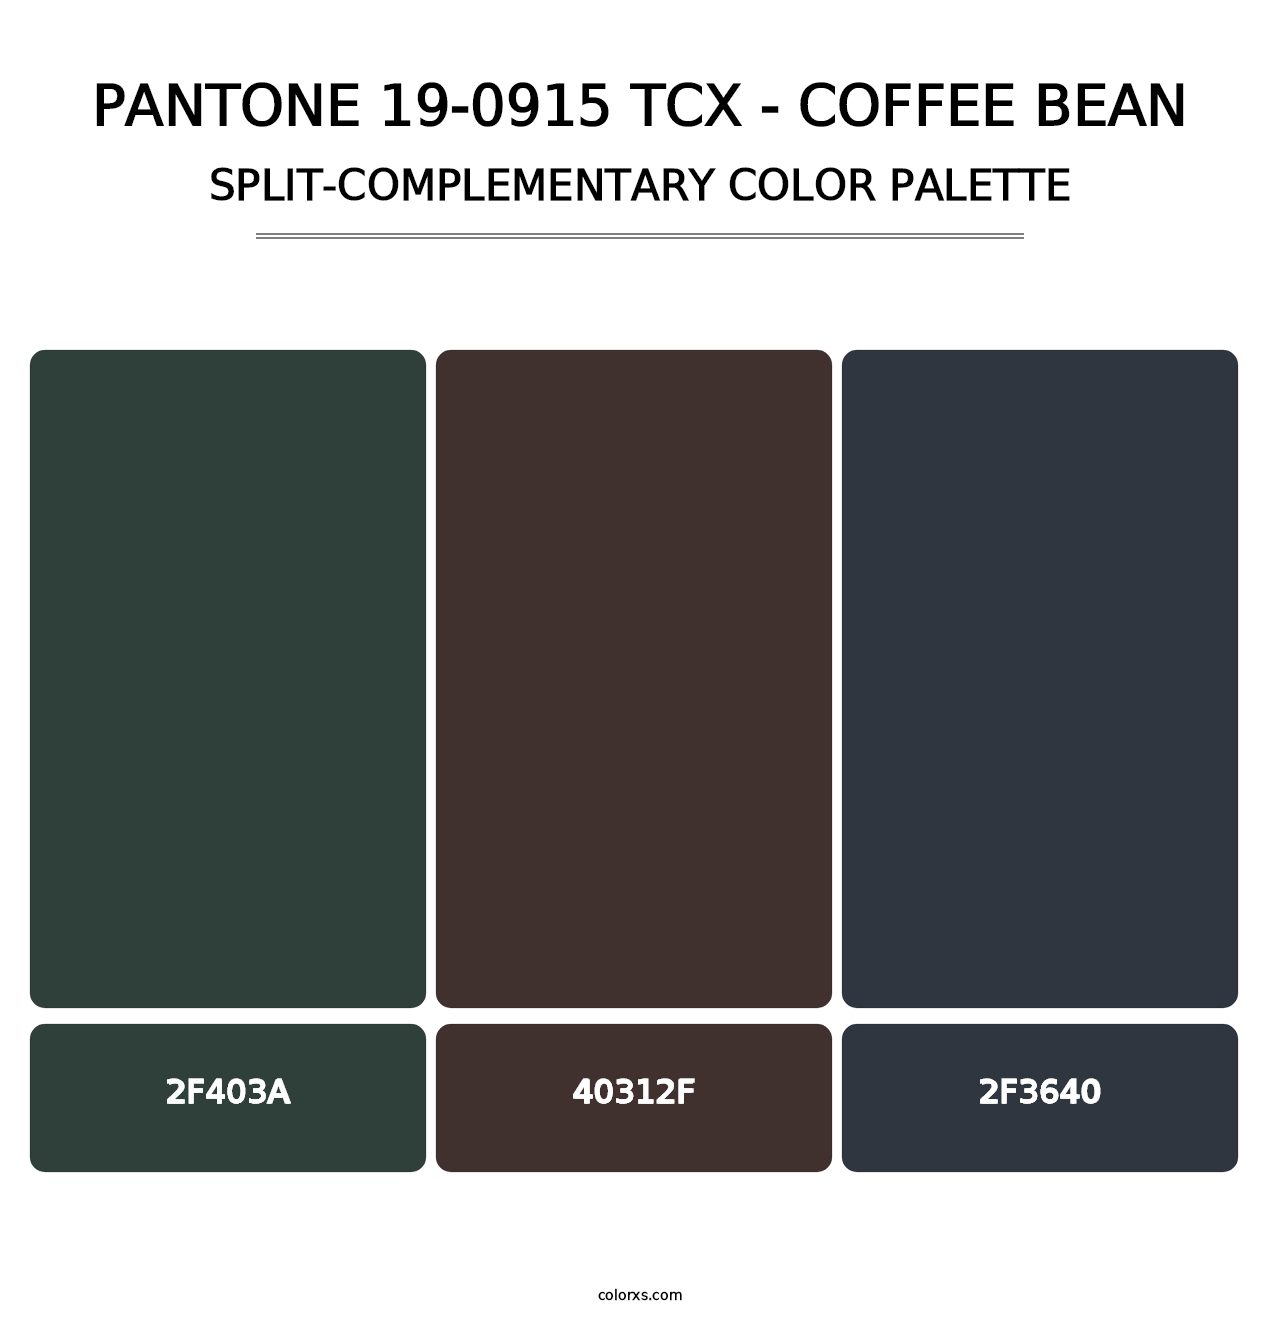 PANTONE 19-0915 TCX - Coffee Bean - Split-Complementary Color Palette